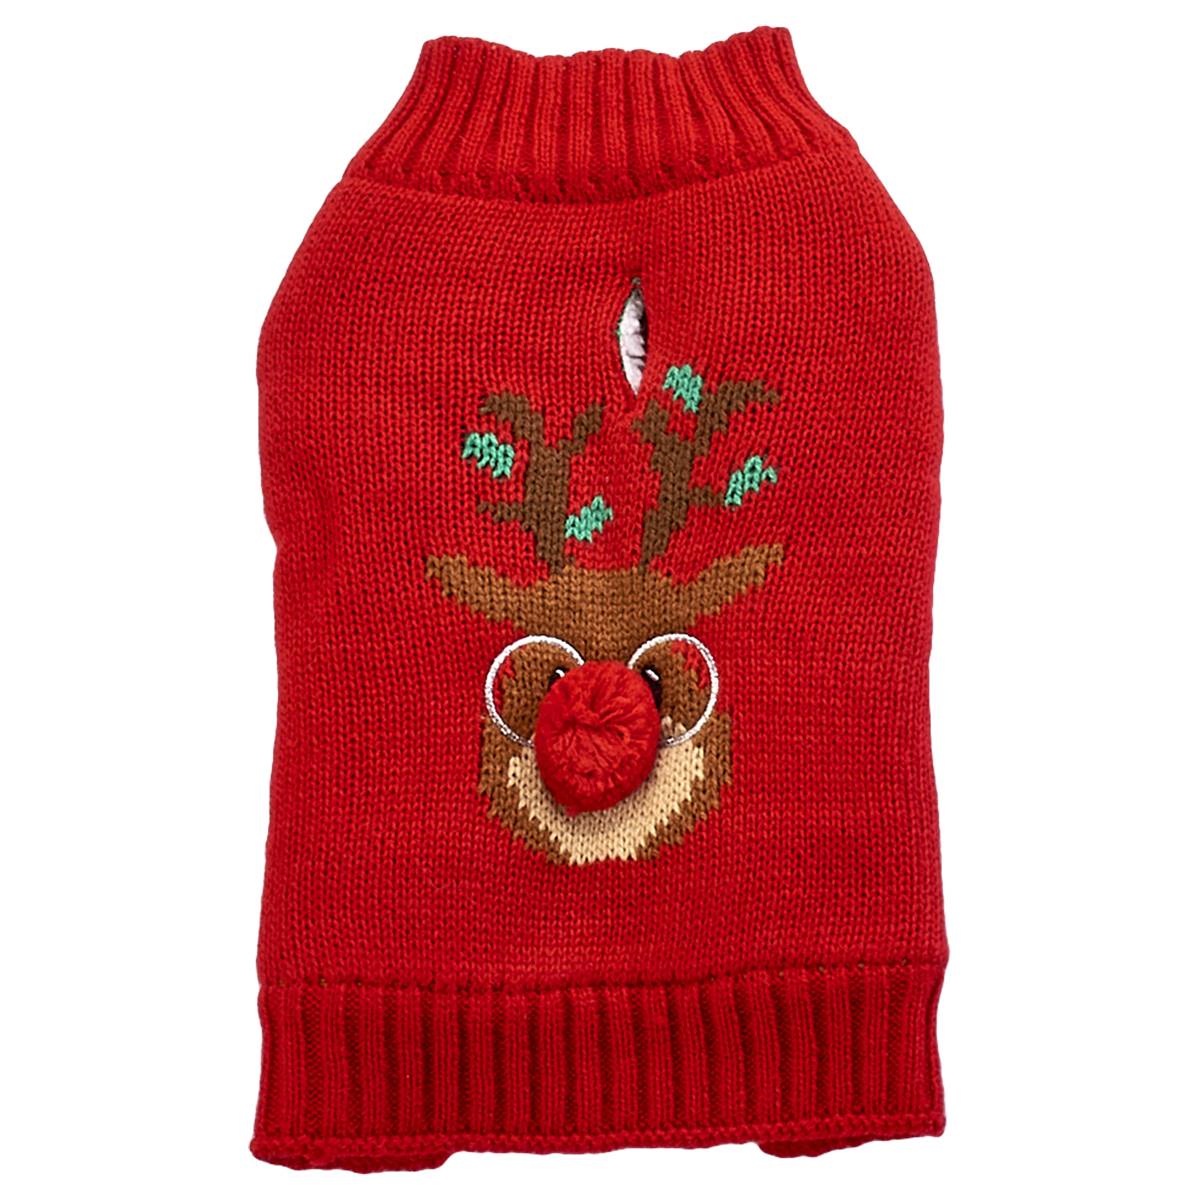 Northpaw Reindeer Jacquard Christmas Pet Sweater